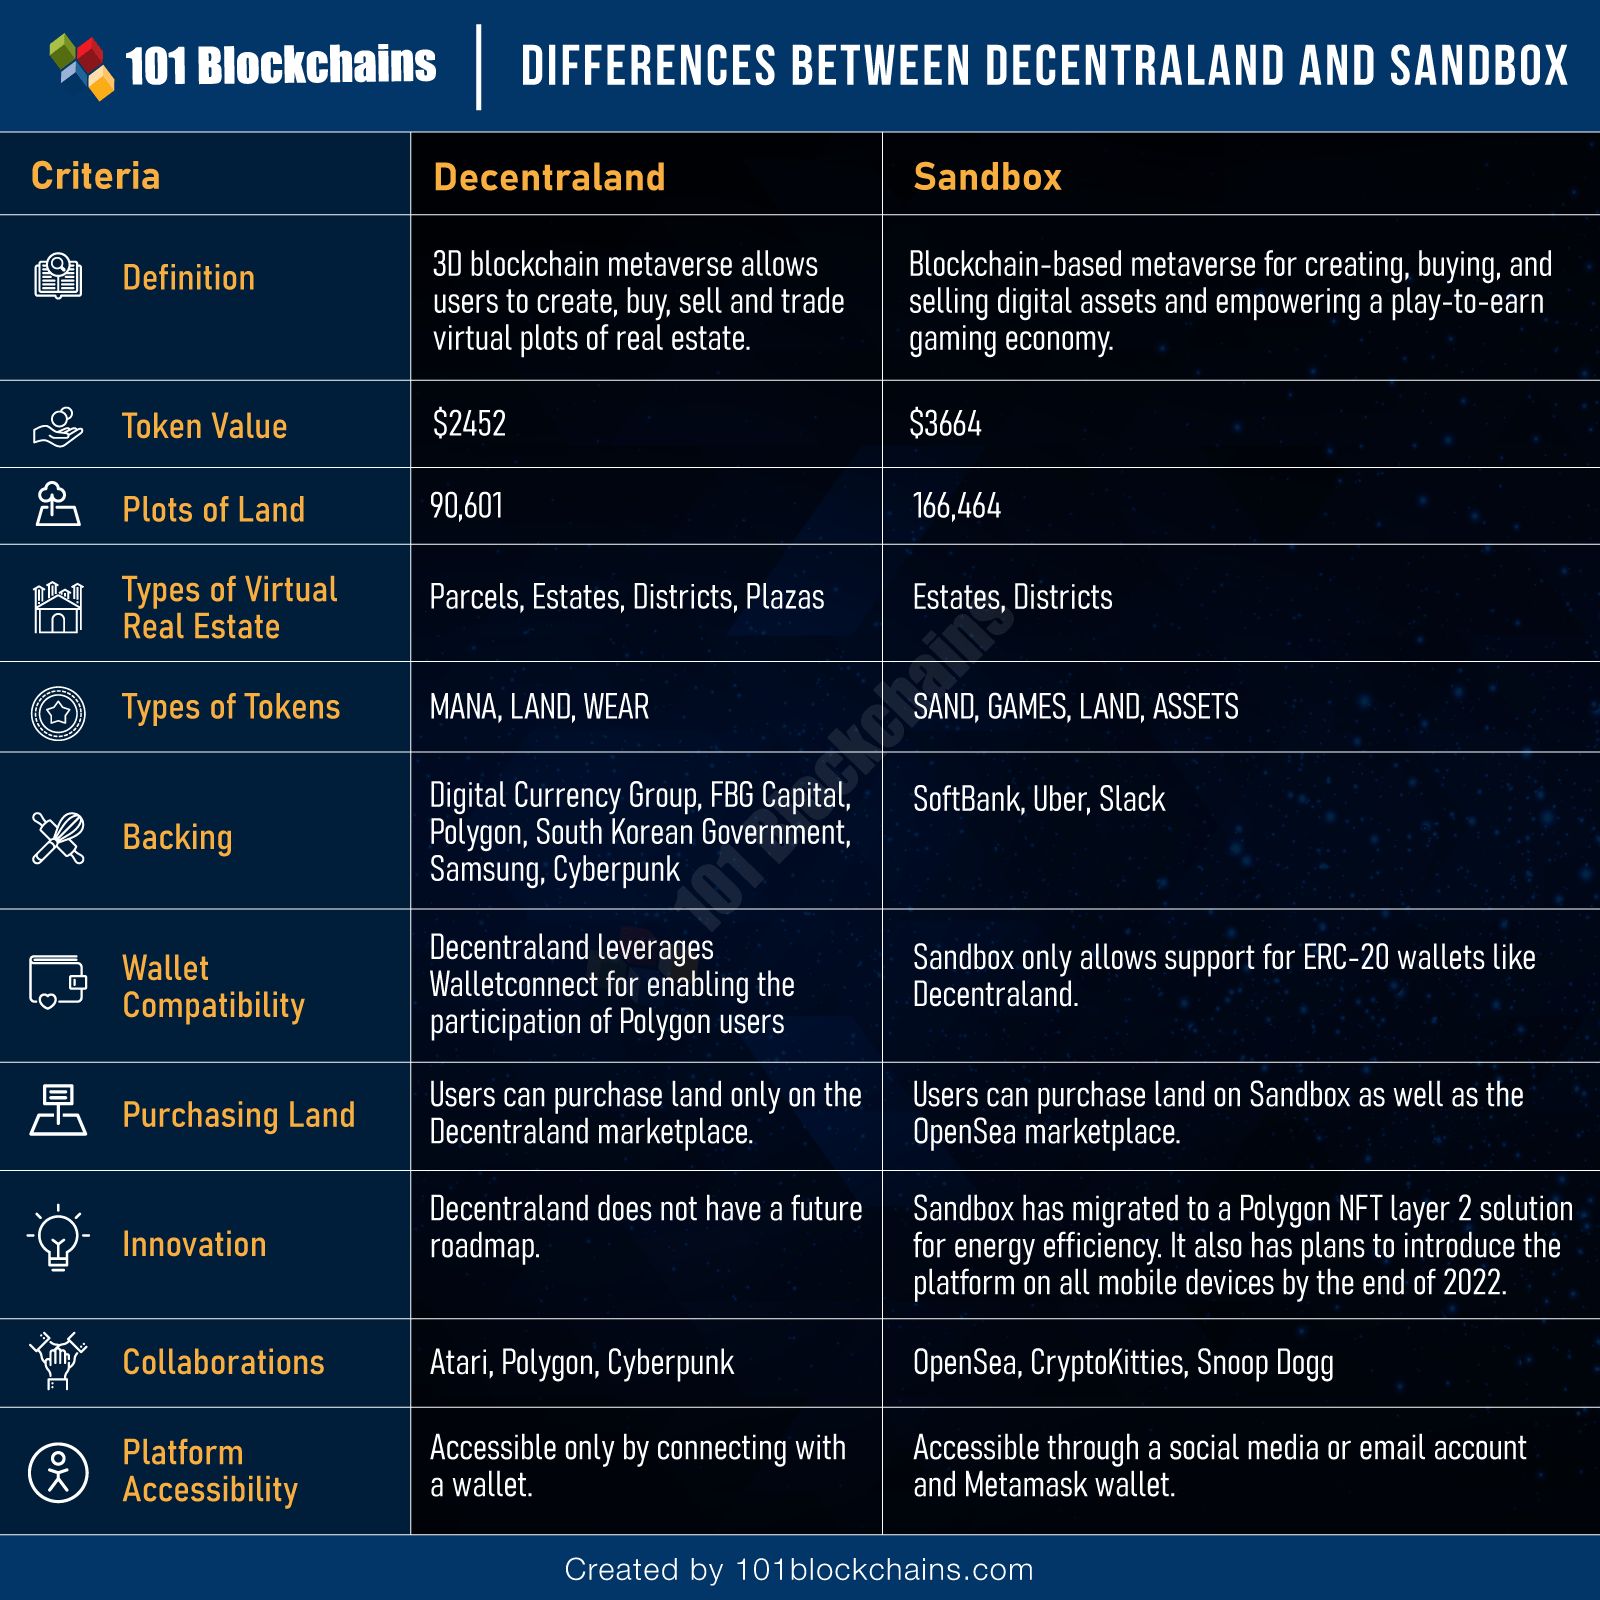 Differences Between Decentraland and Sandbox